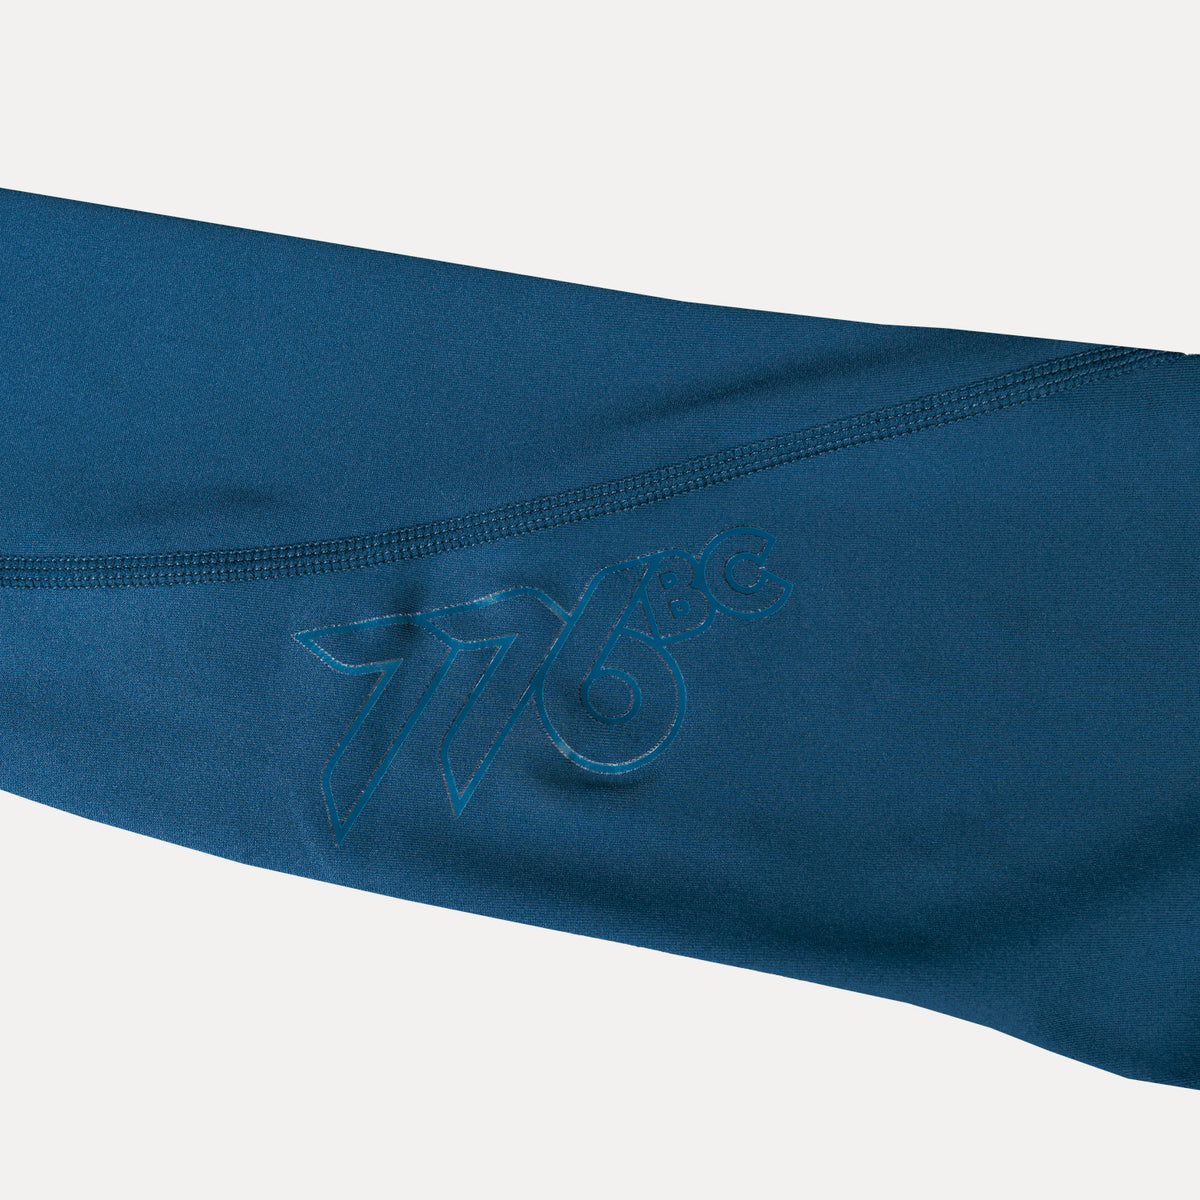 closeup of 776bc logo on leg of dark blue tights